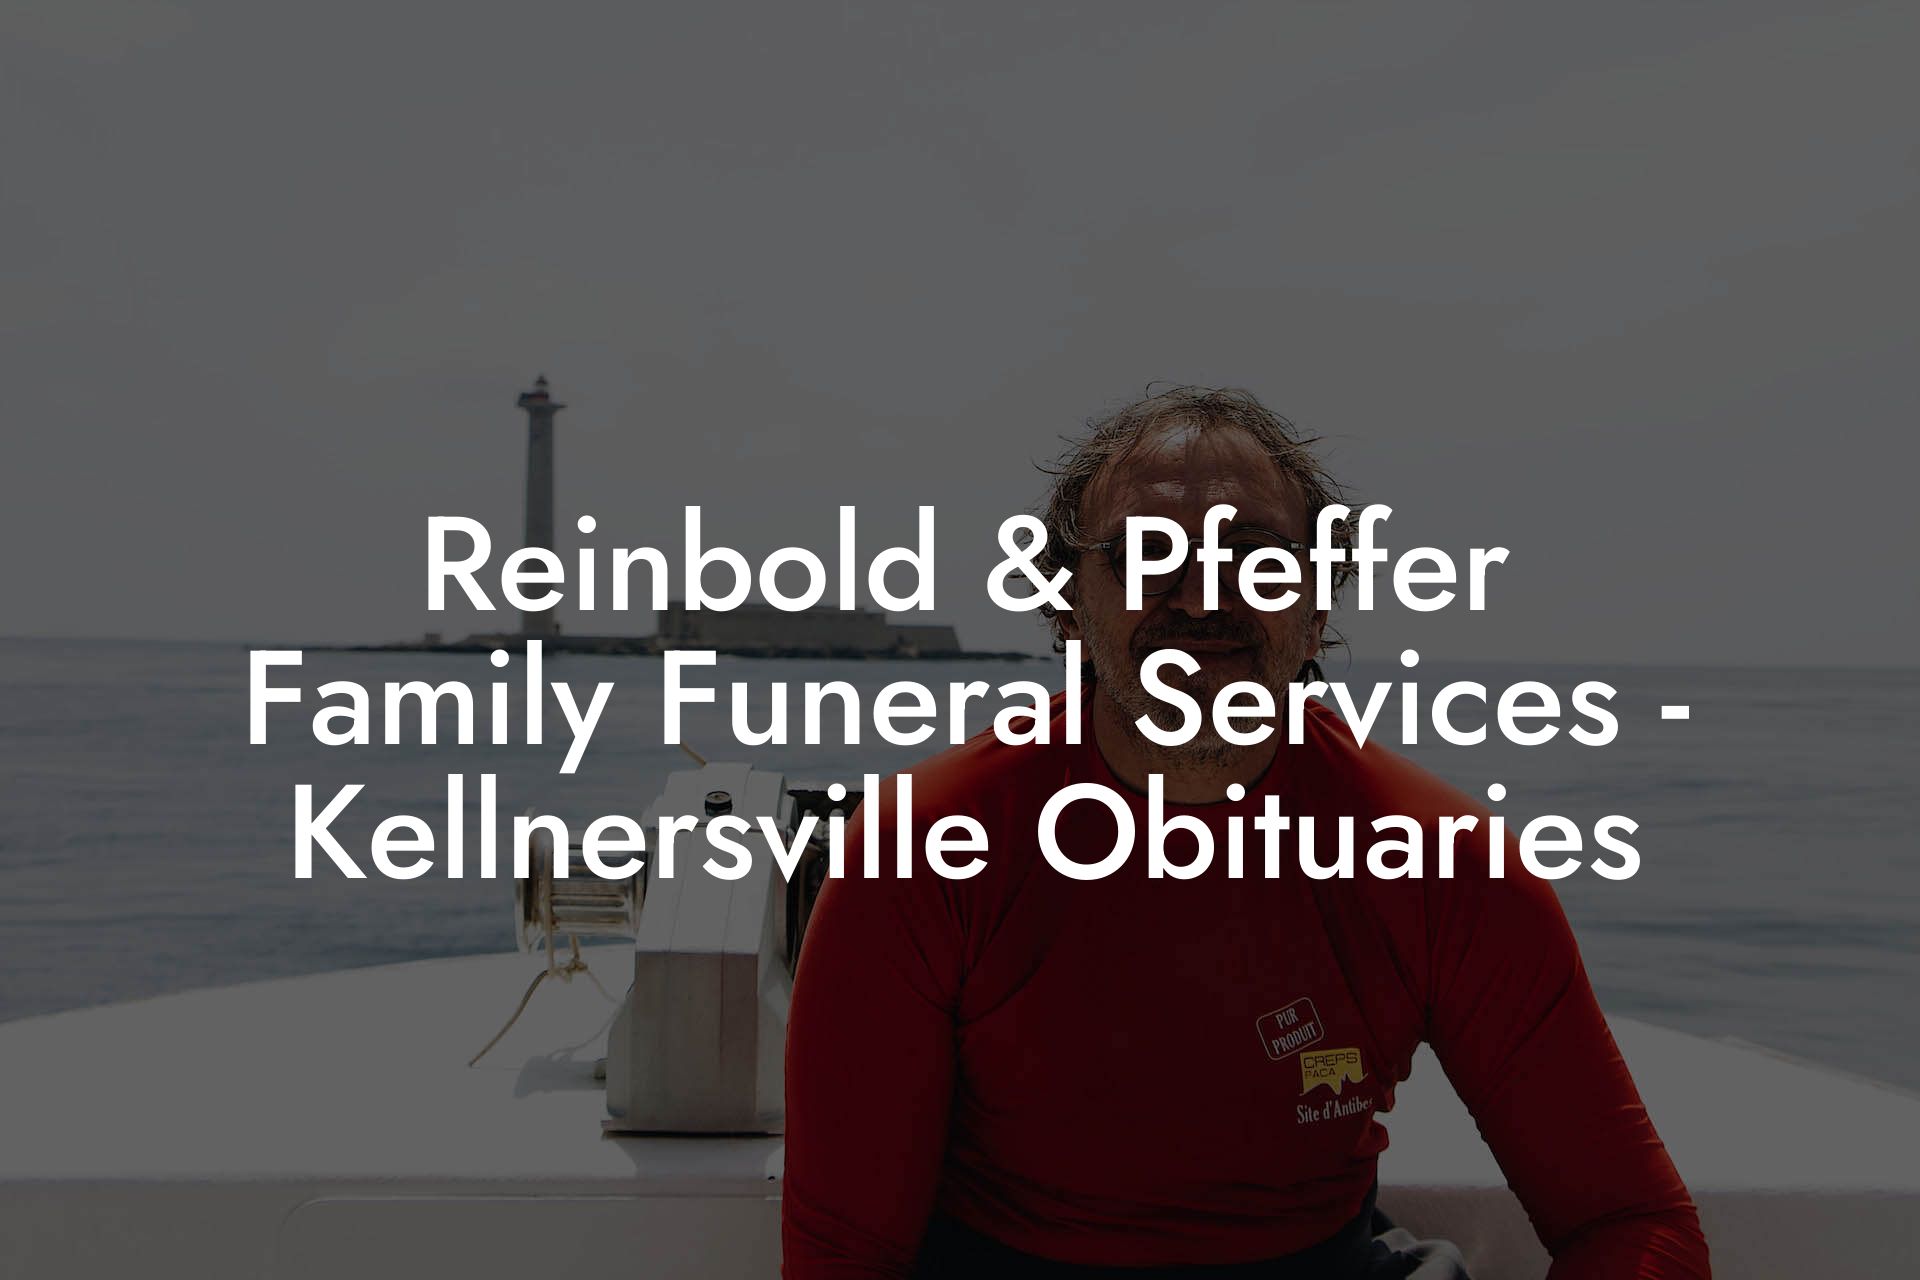 Reinbold & Pfeffer Family Funeral Services - Kellnersville Obituaries